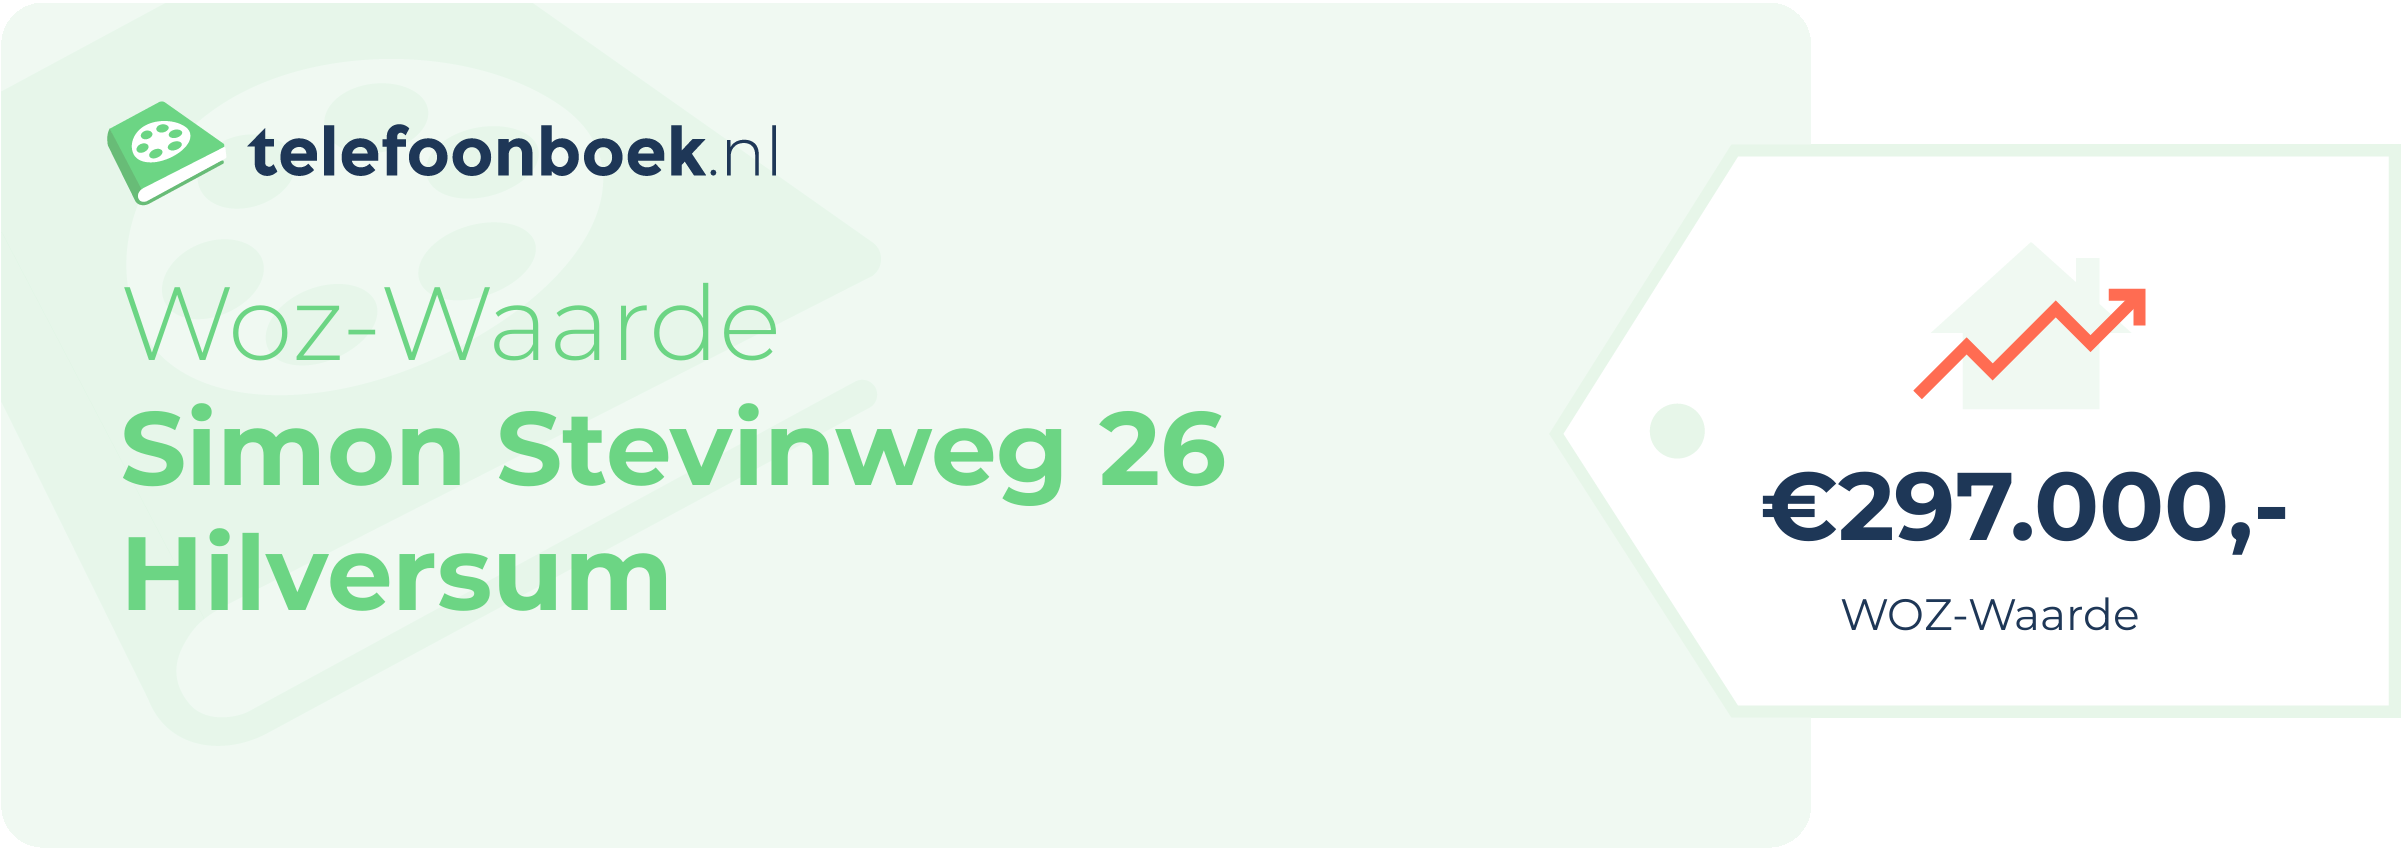 WOZ-waarde Simon Stevinweg 26 Hilversum